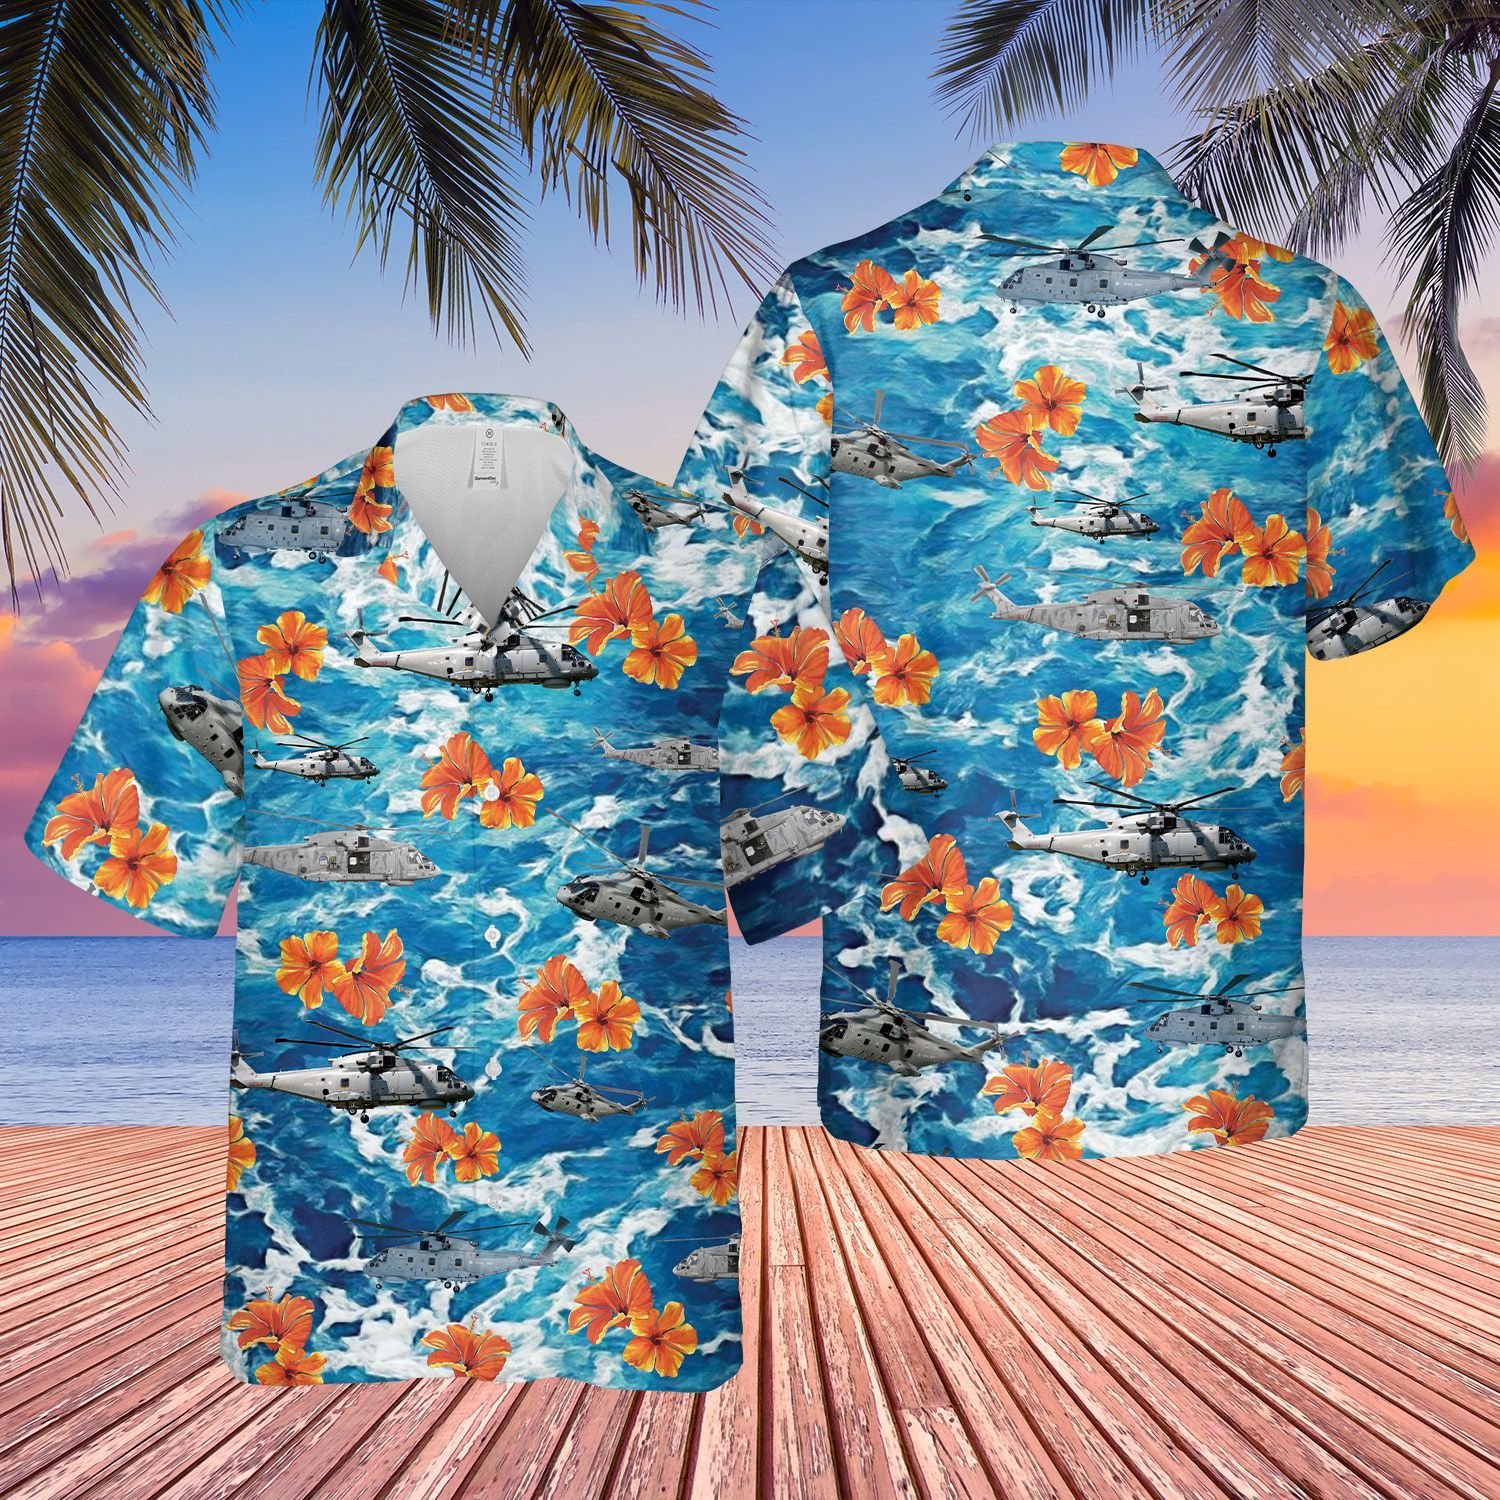 Enjoy your summer with top cool hawaiian shirt below 225